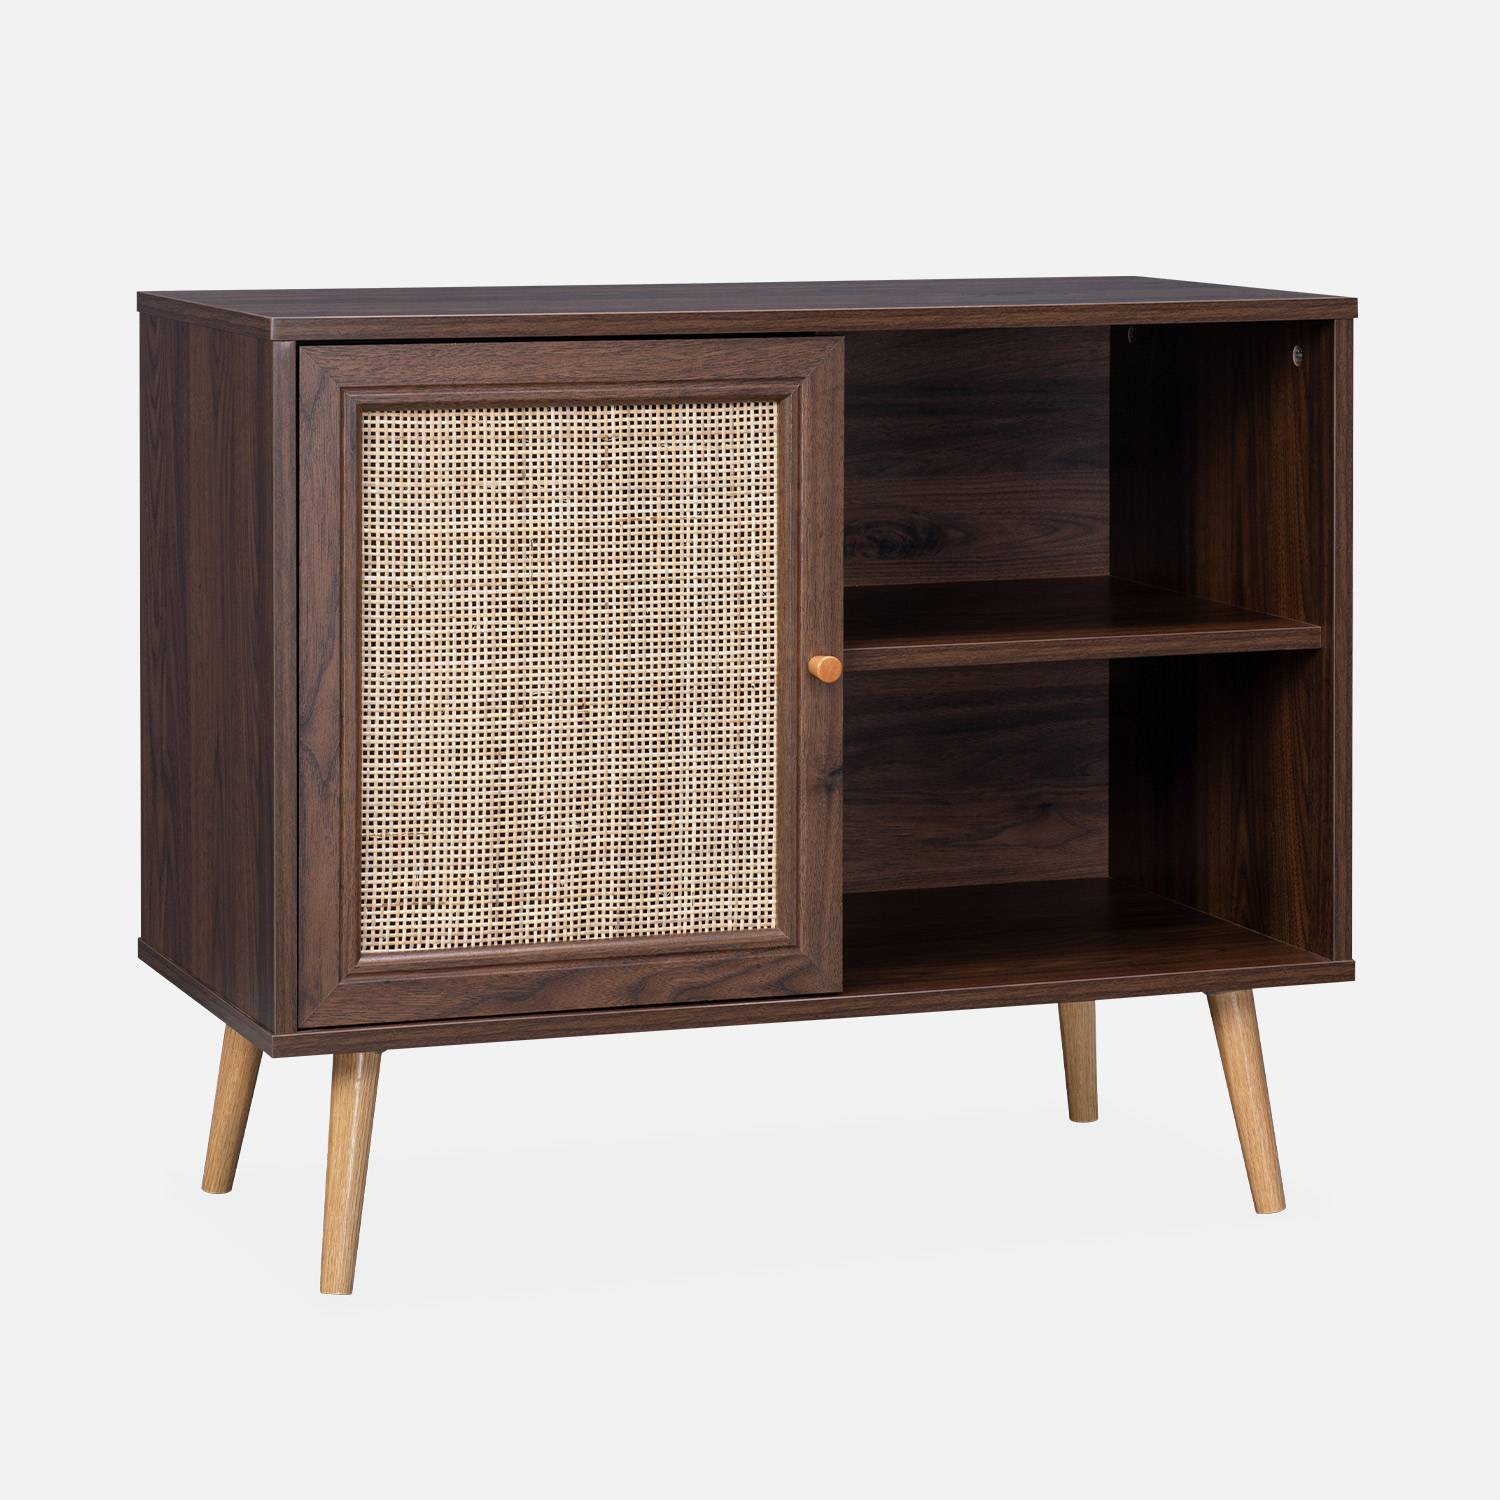 Wooden and cane rattan detail storage cabinet with 2 shelves, 1 cupboard, Scandi-style legs, 80x39x65.8cm - Boheme - Dark wood colour,sweeek,Photo2